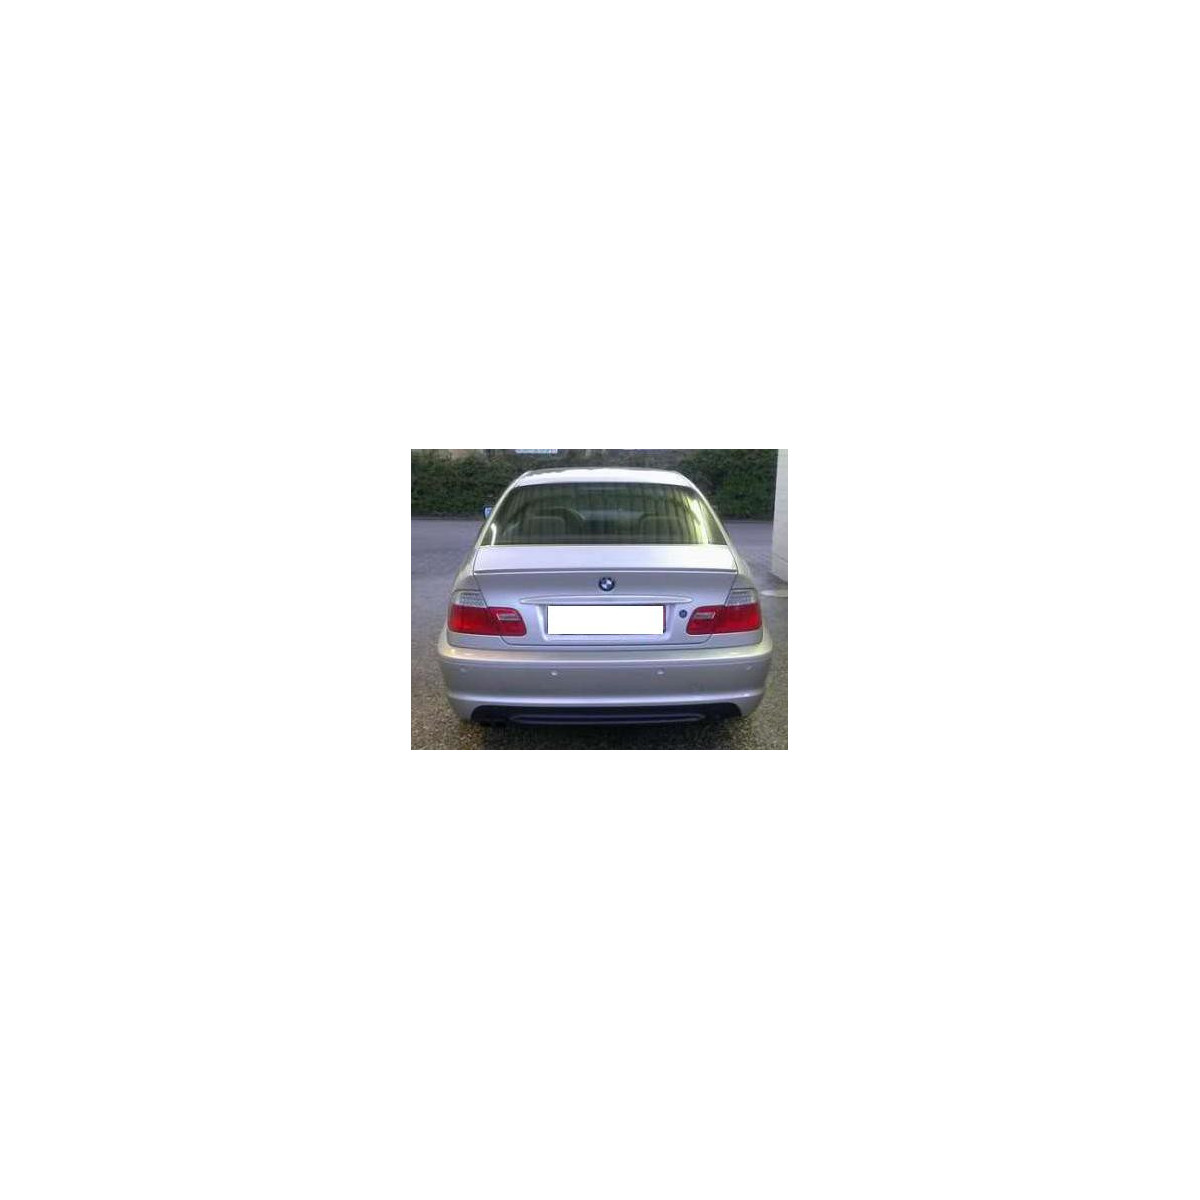 SPOILER NA KLAPE BMW E46 COUPE 99-06 PU (ABS)